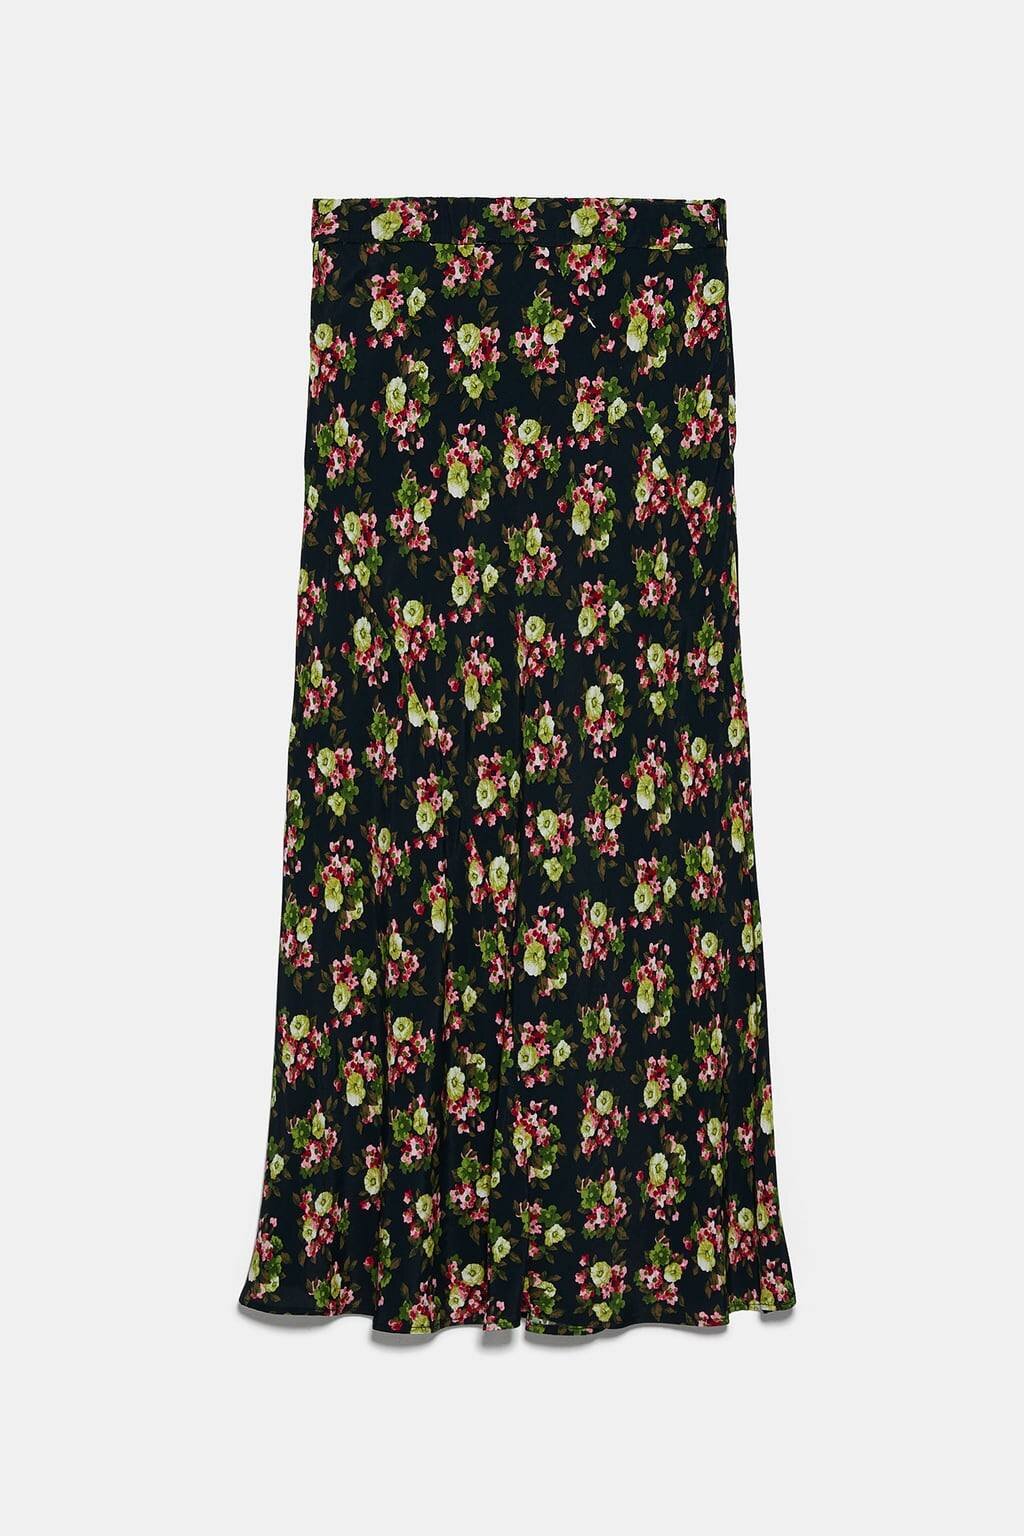 Zara Floral Print Midi Skirt.jpg